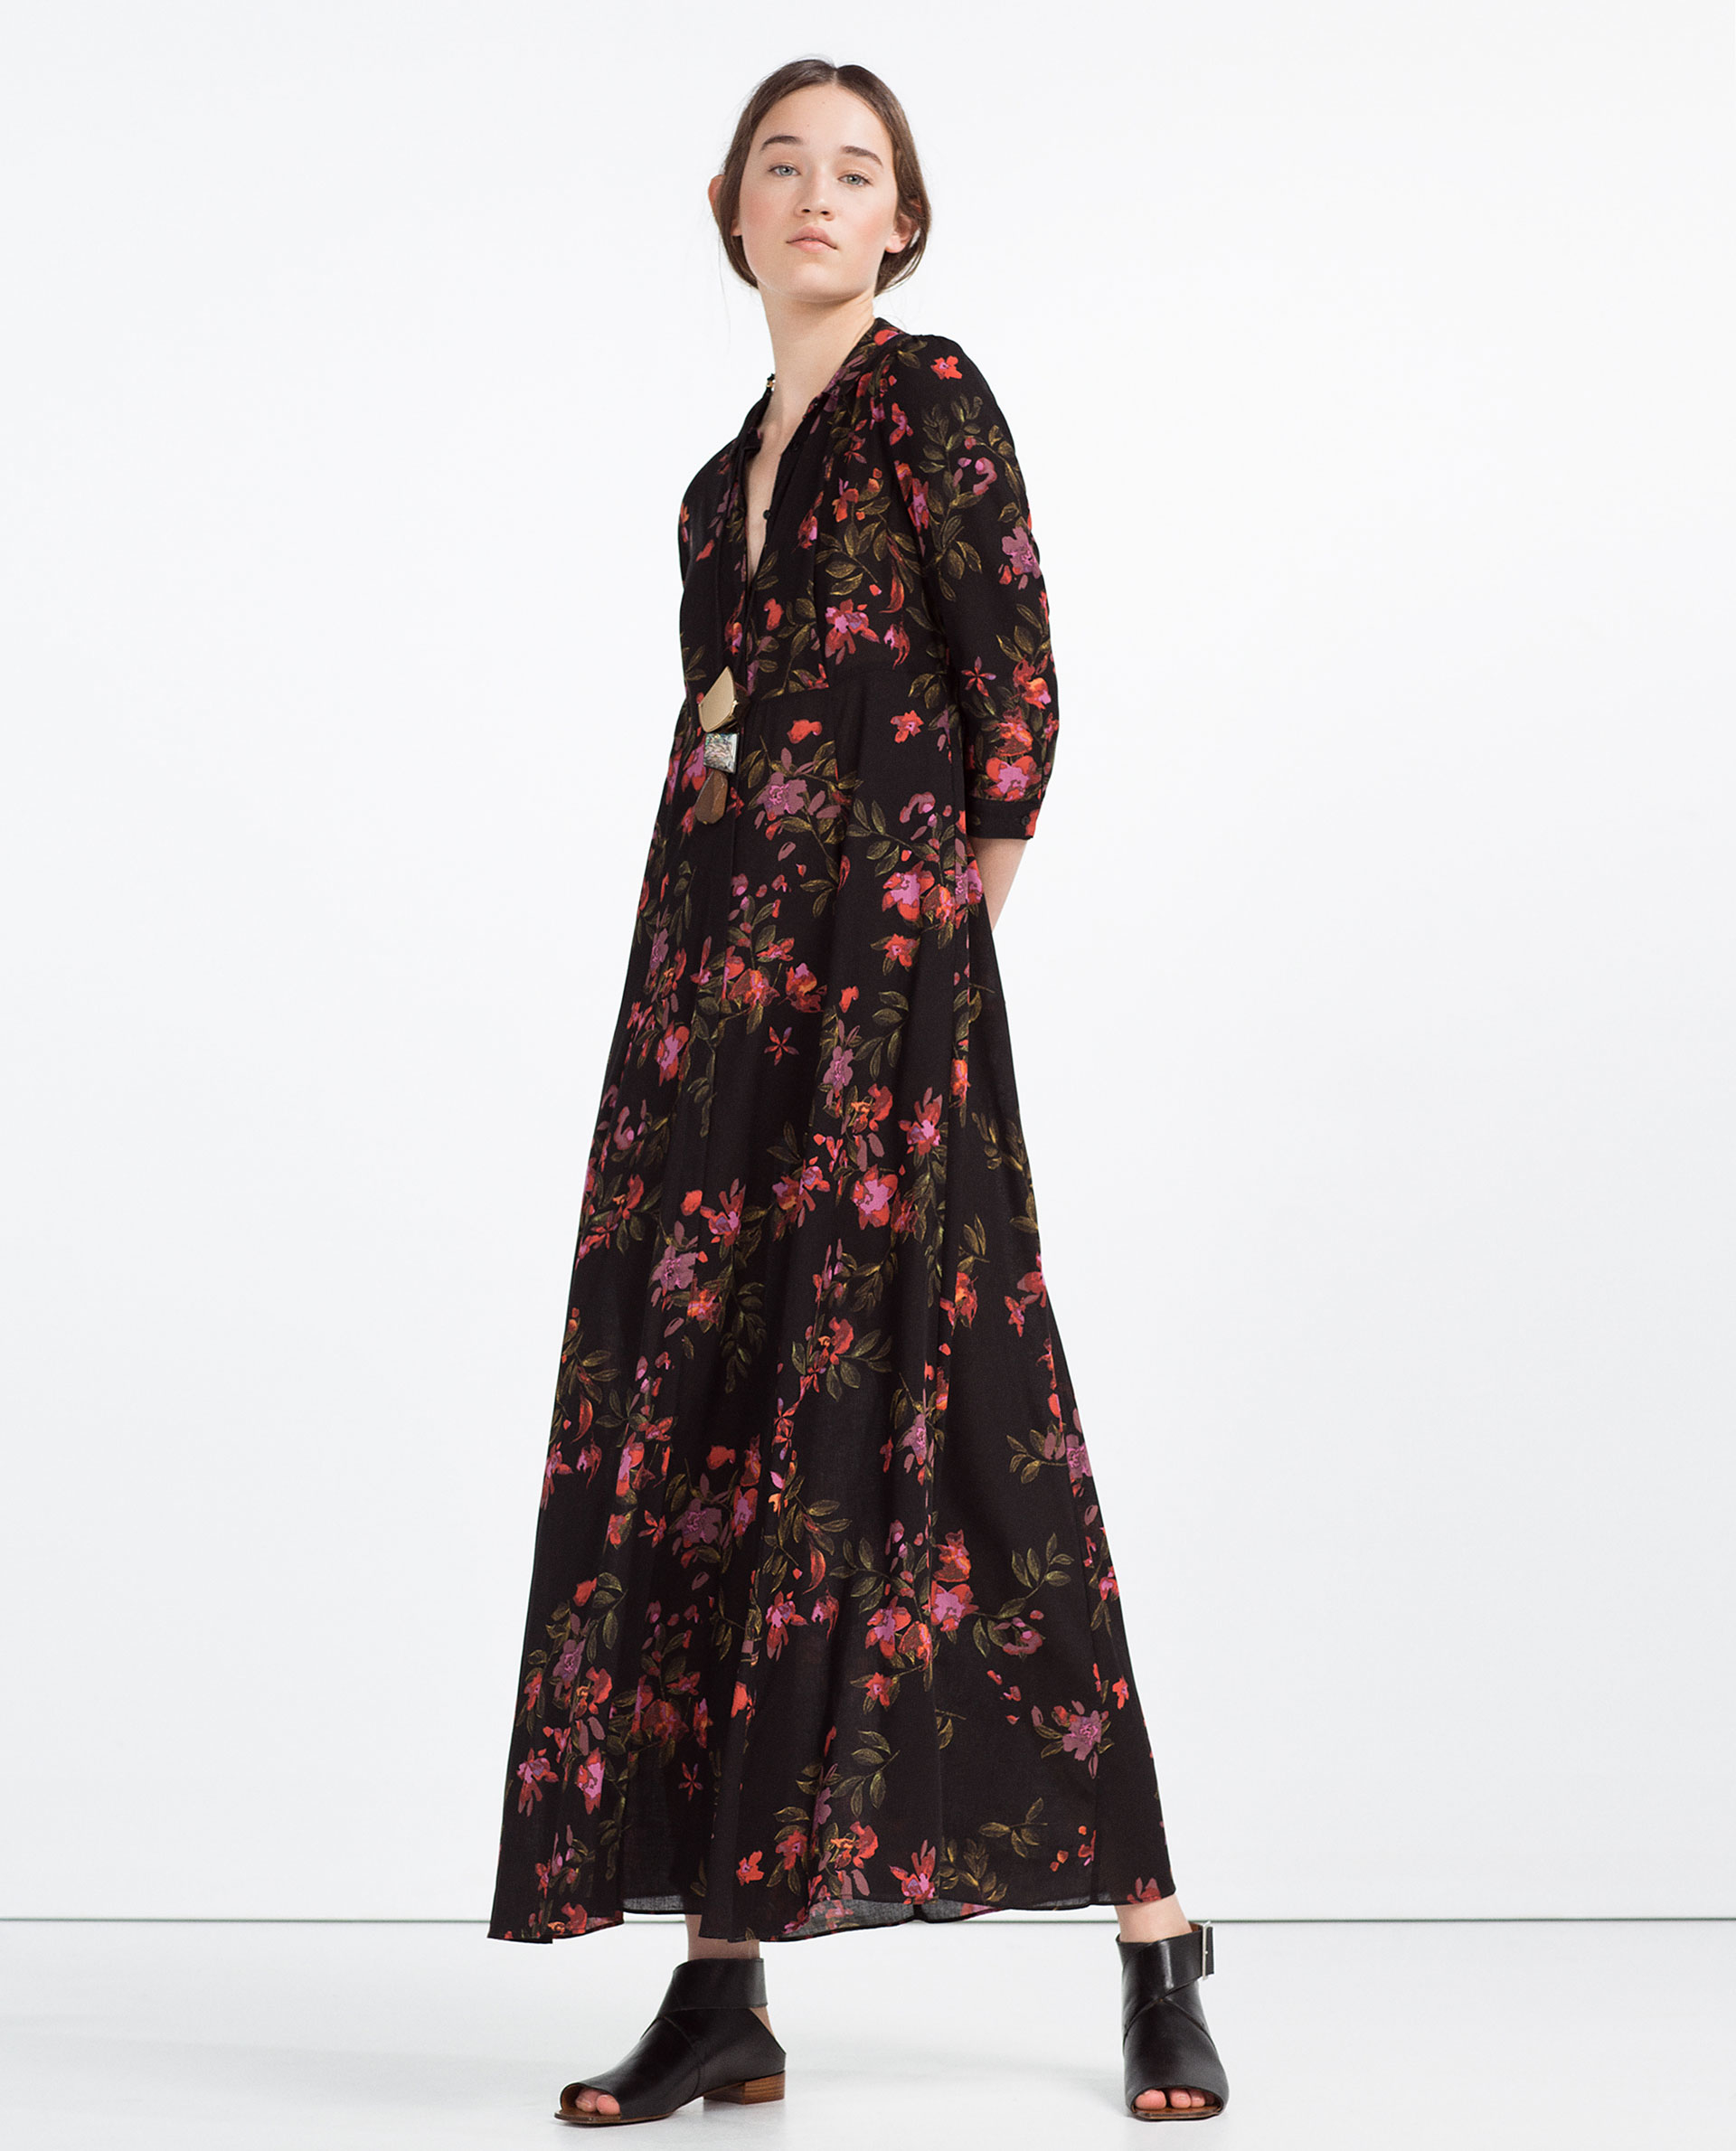 Black maxi dress zara – Dress online uk